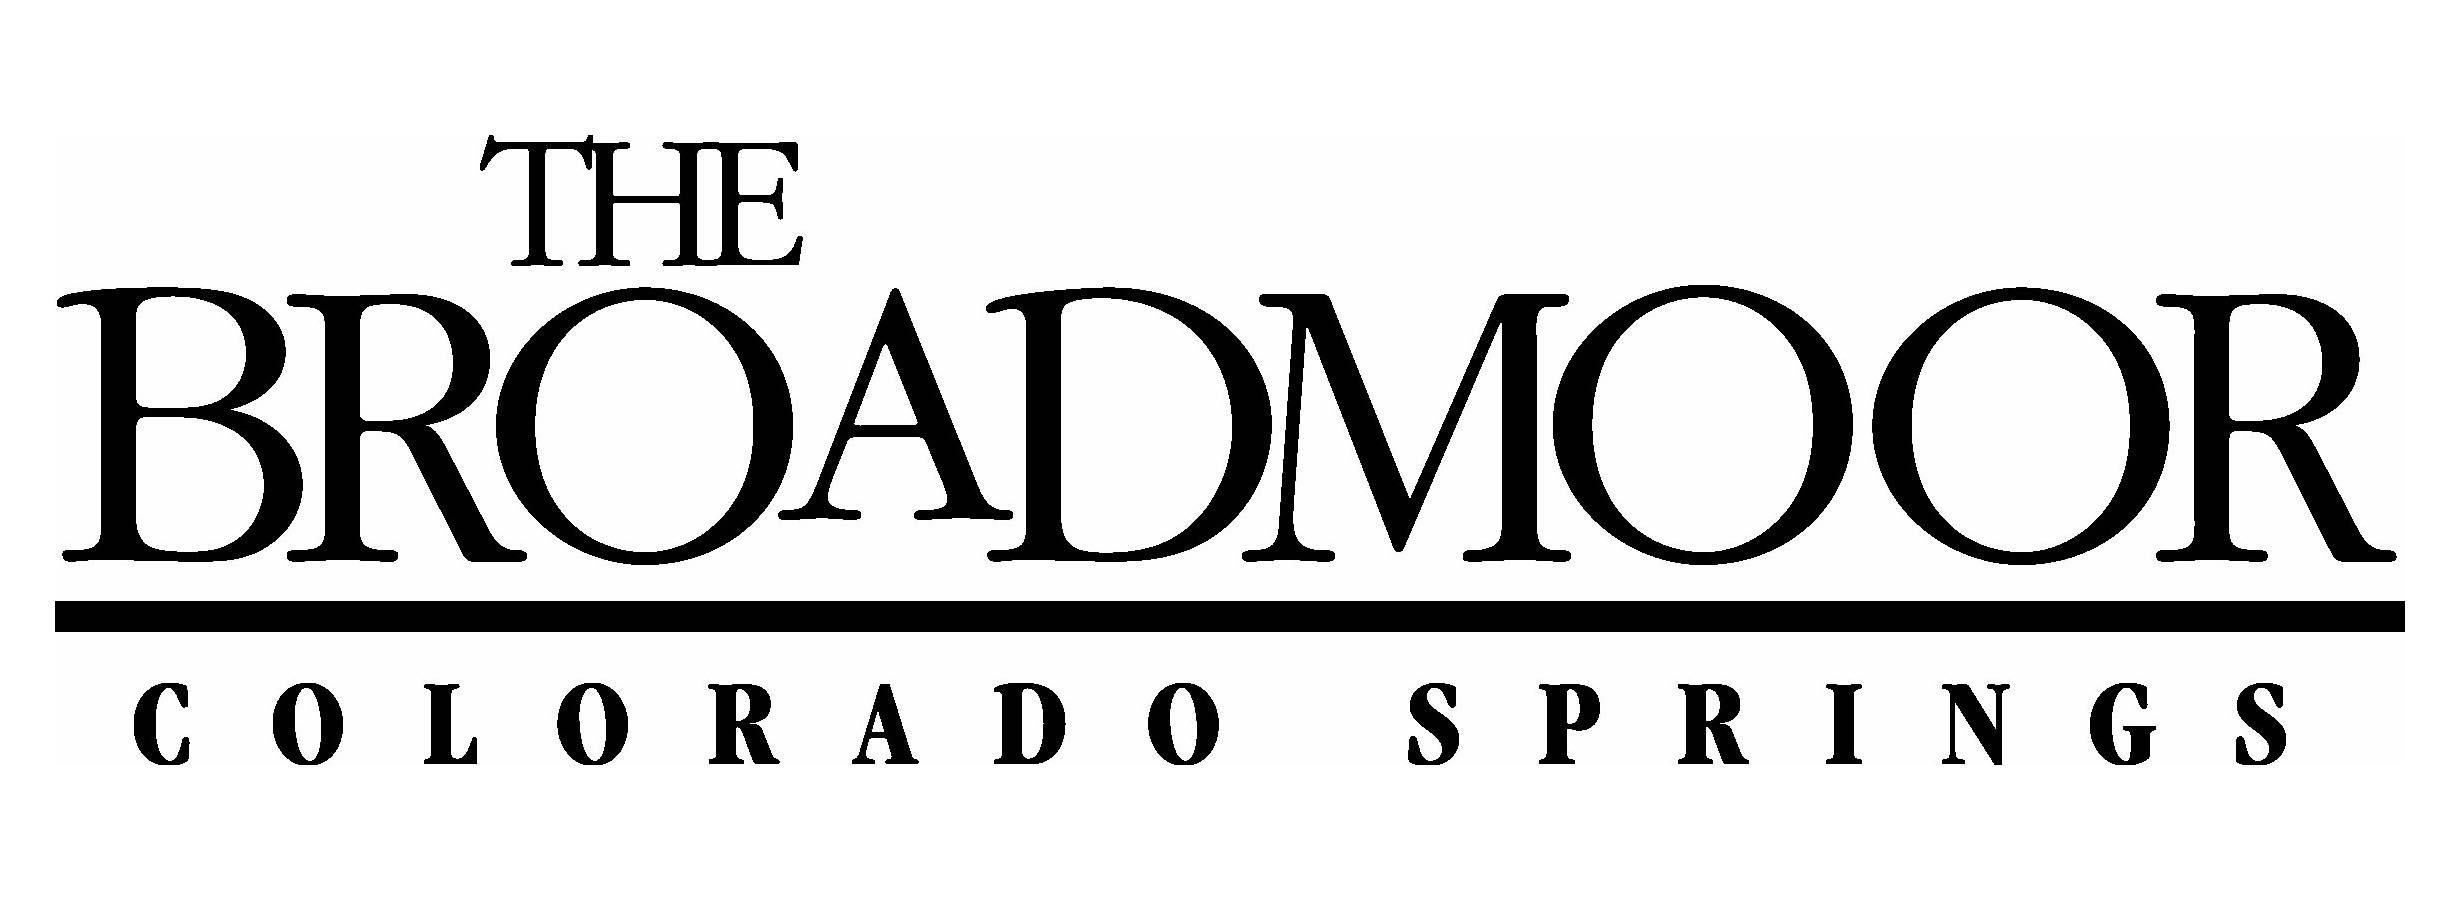 Image result for The Broadmoor Colorado Springs